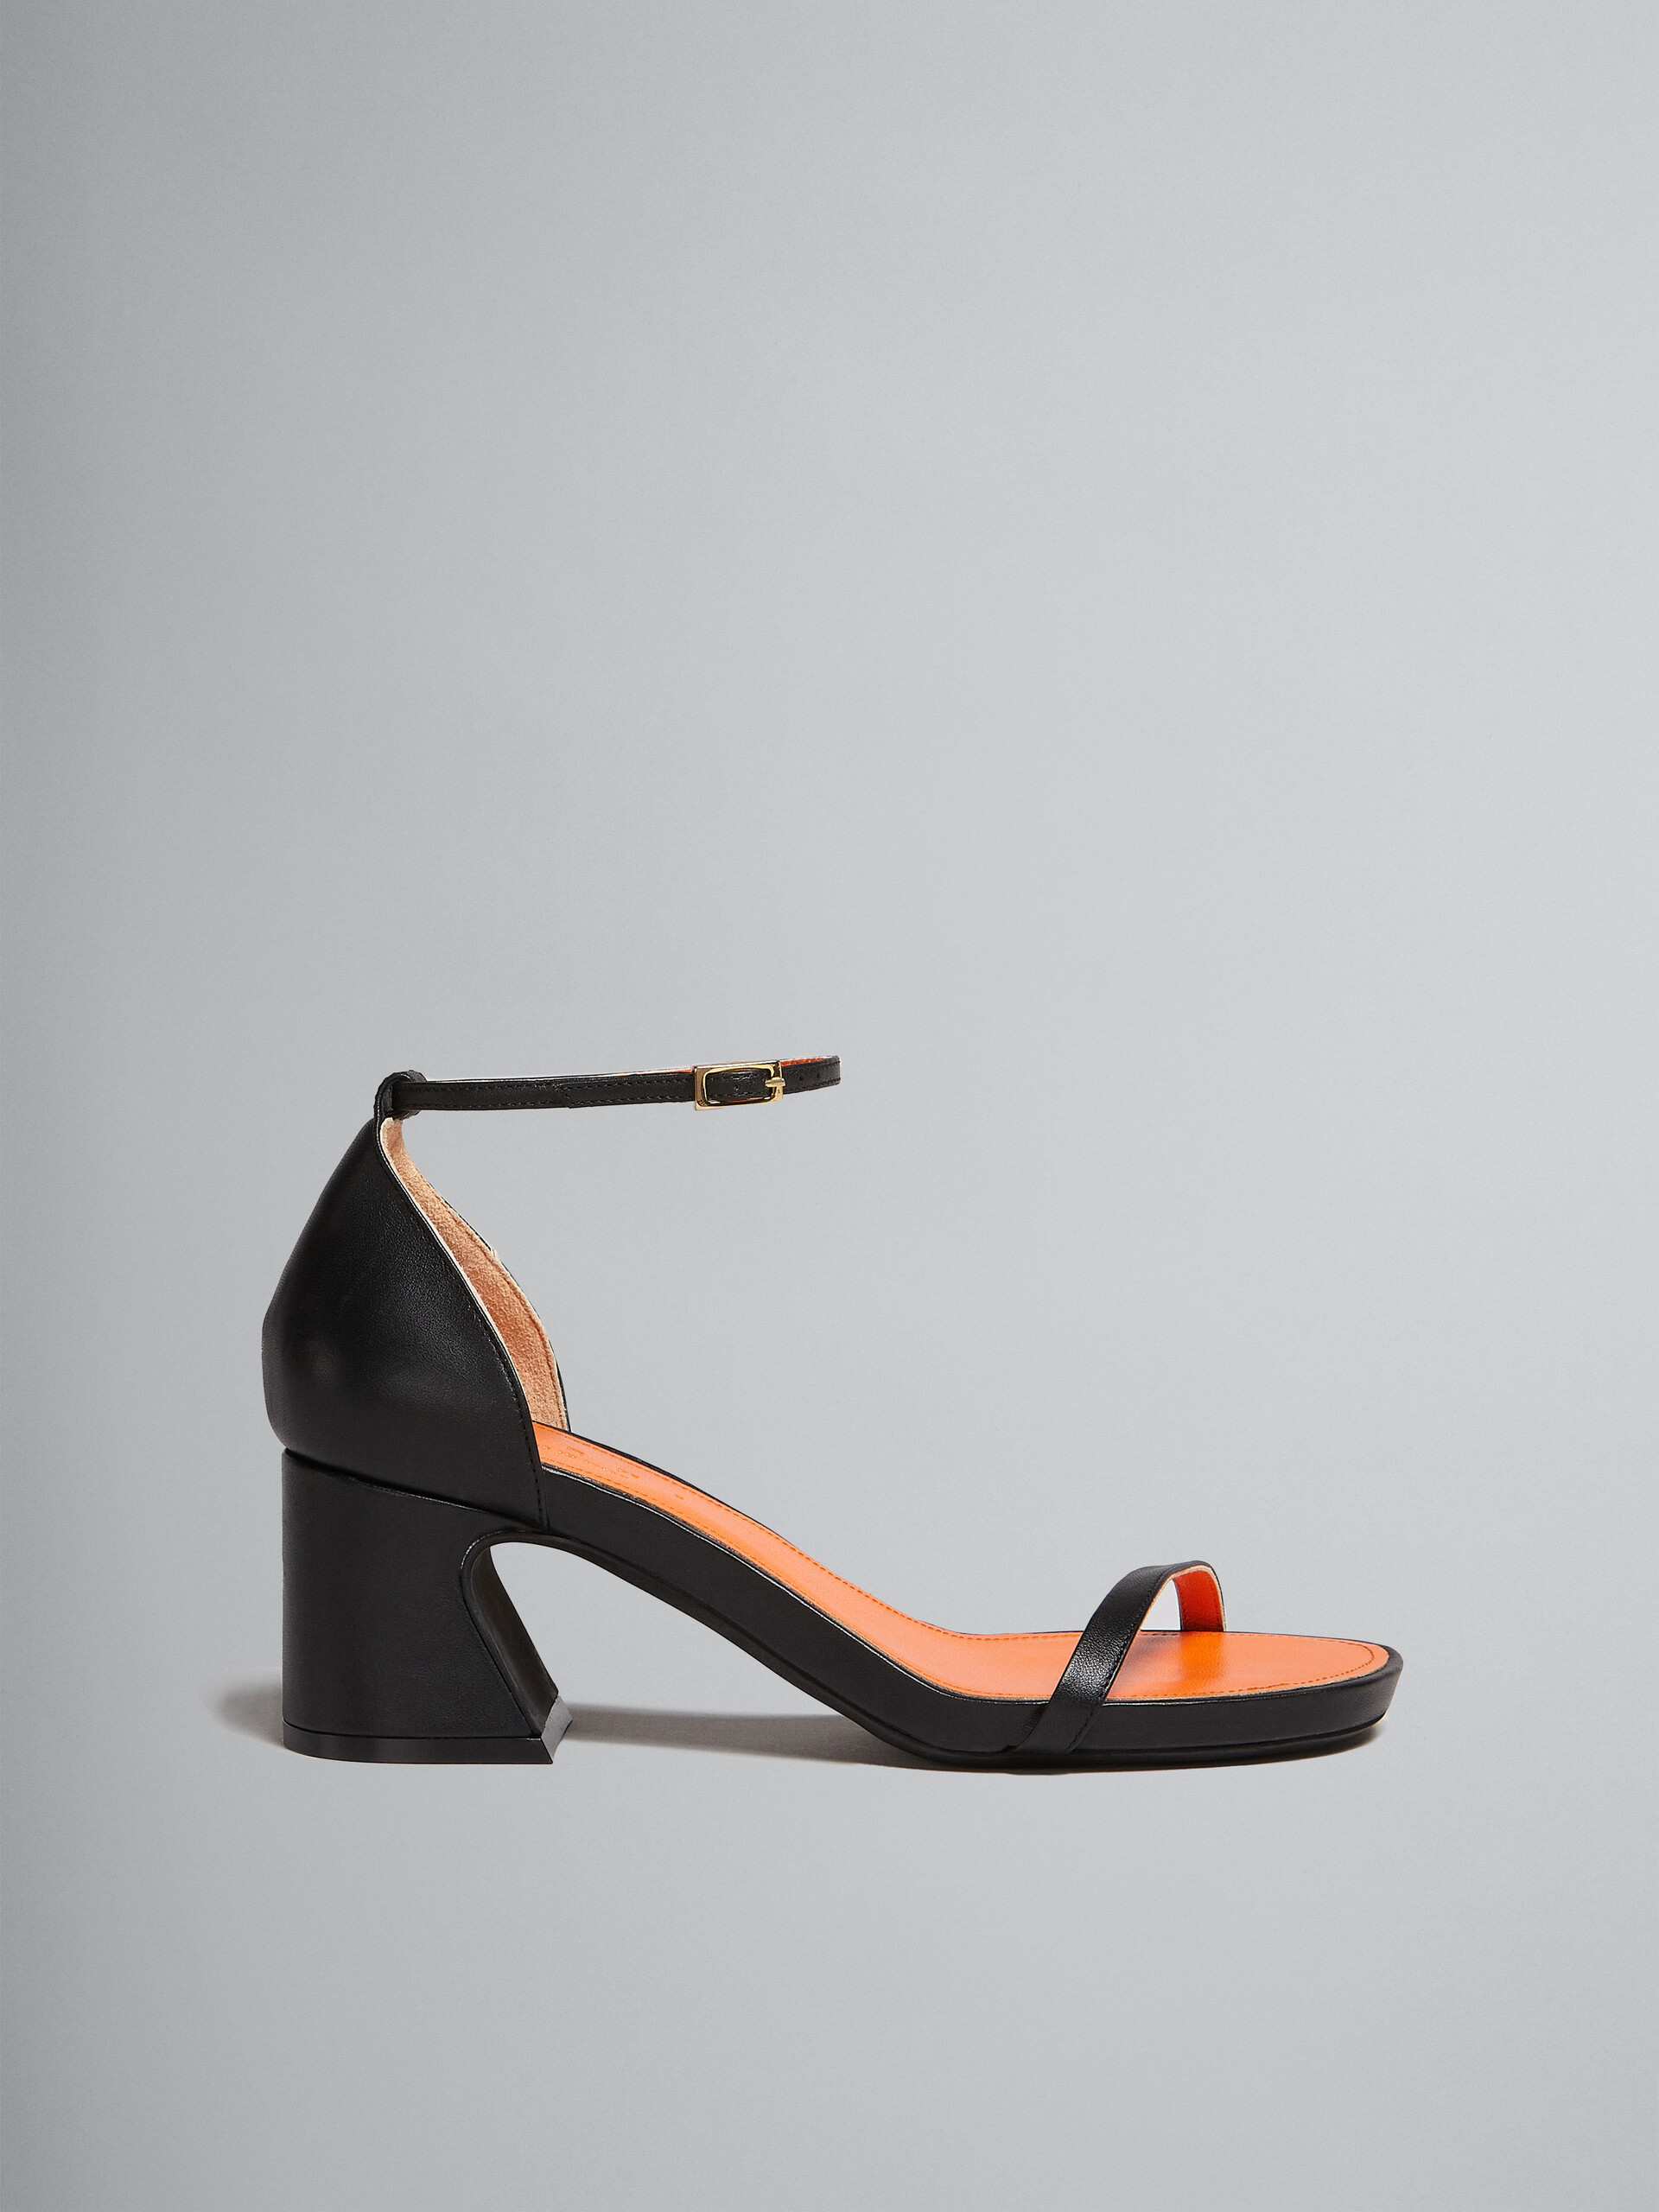 Black nappa leather sandal - Sandals - Image 1